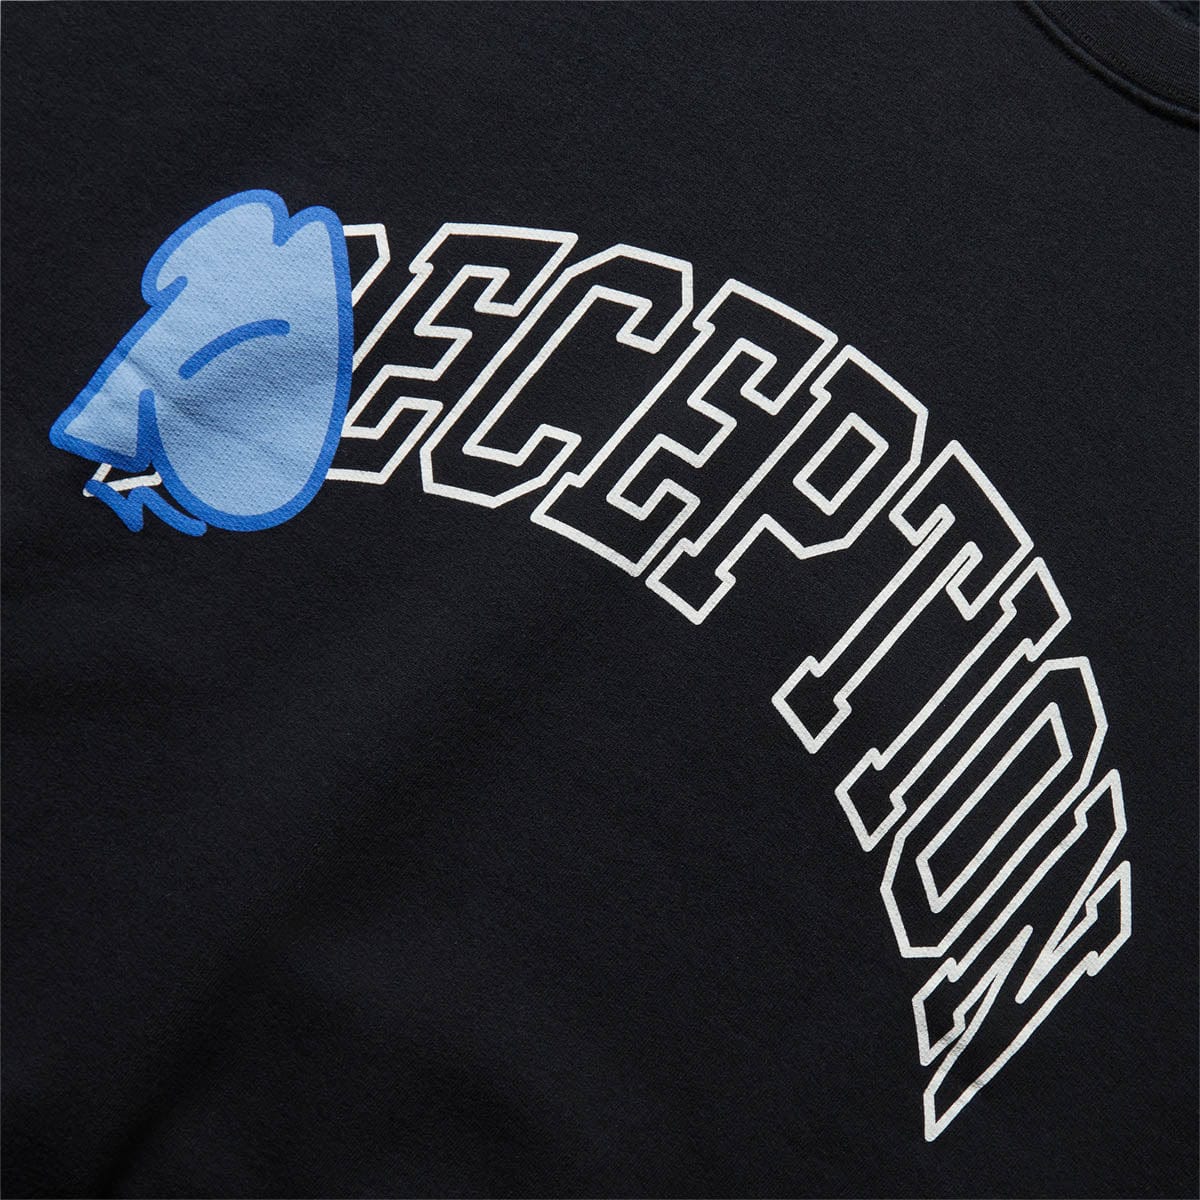 Reception Hoodies & Sweatshirts CLUB SWEAT DECEPTION